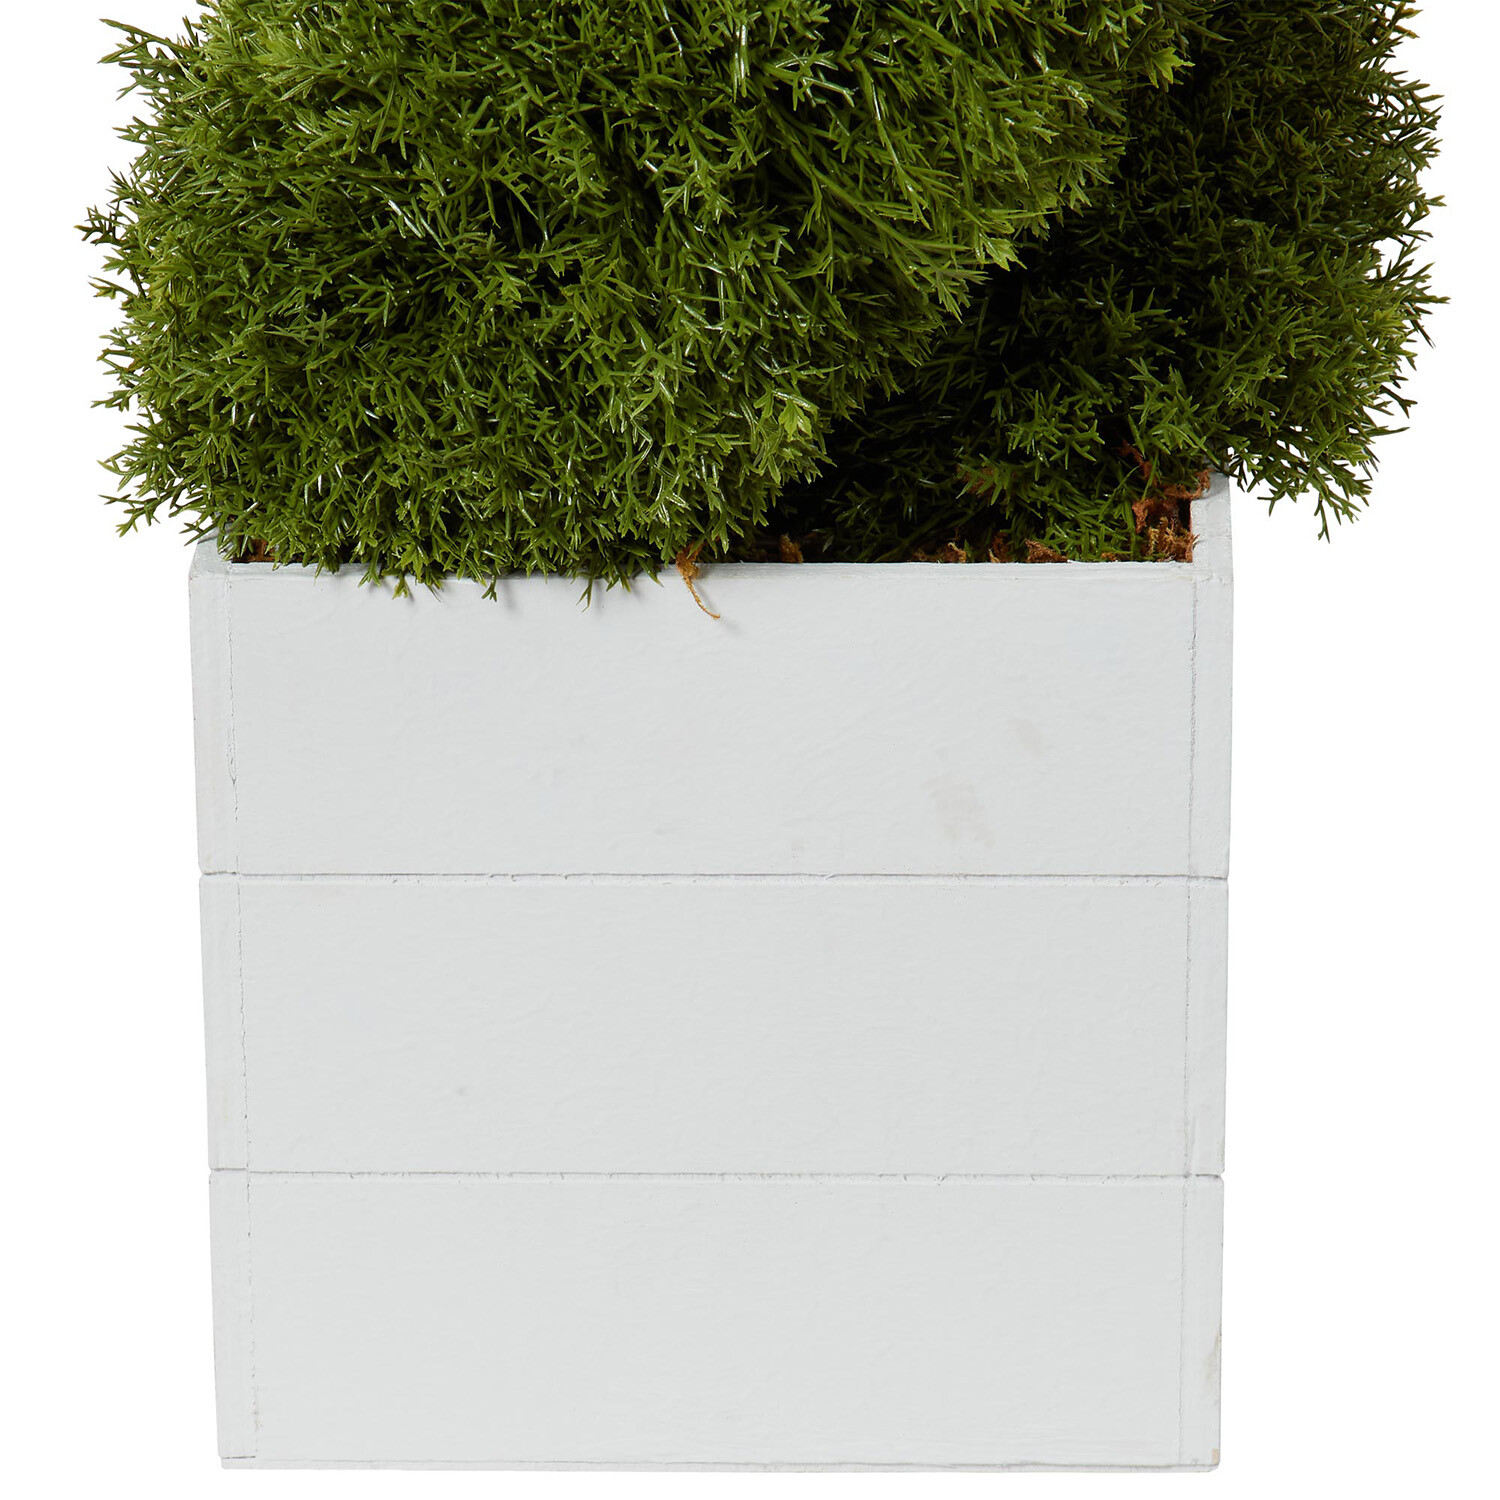 Cypress Spiral Tree - Green Image 3